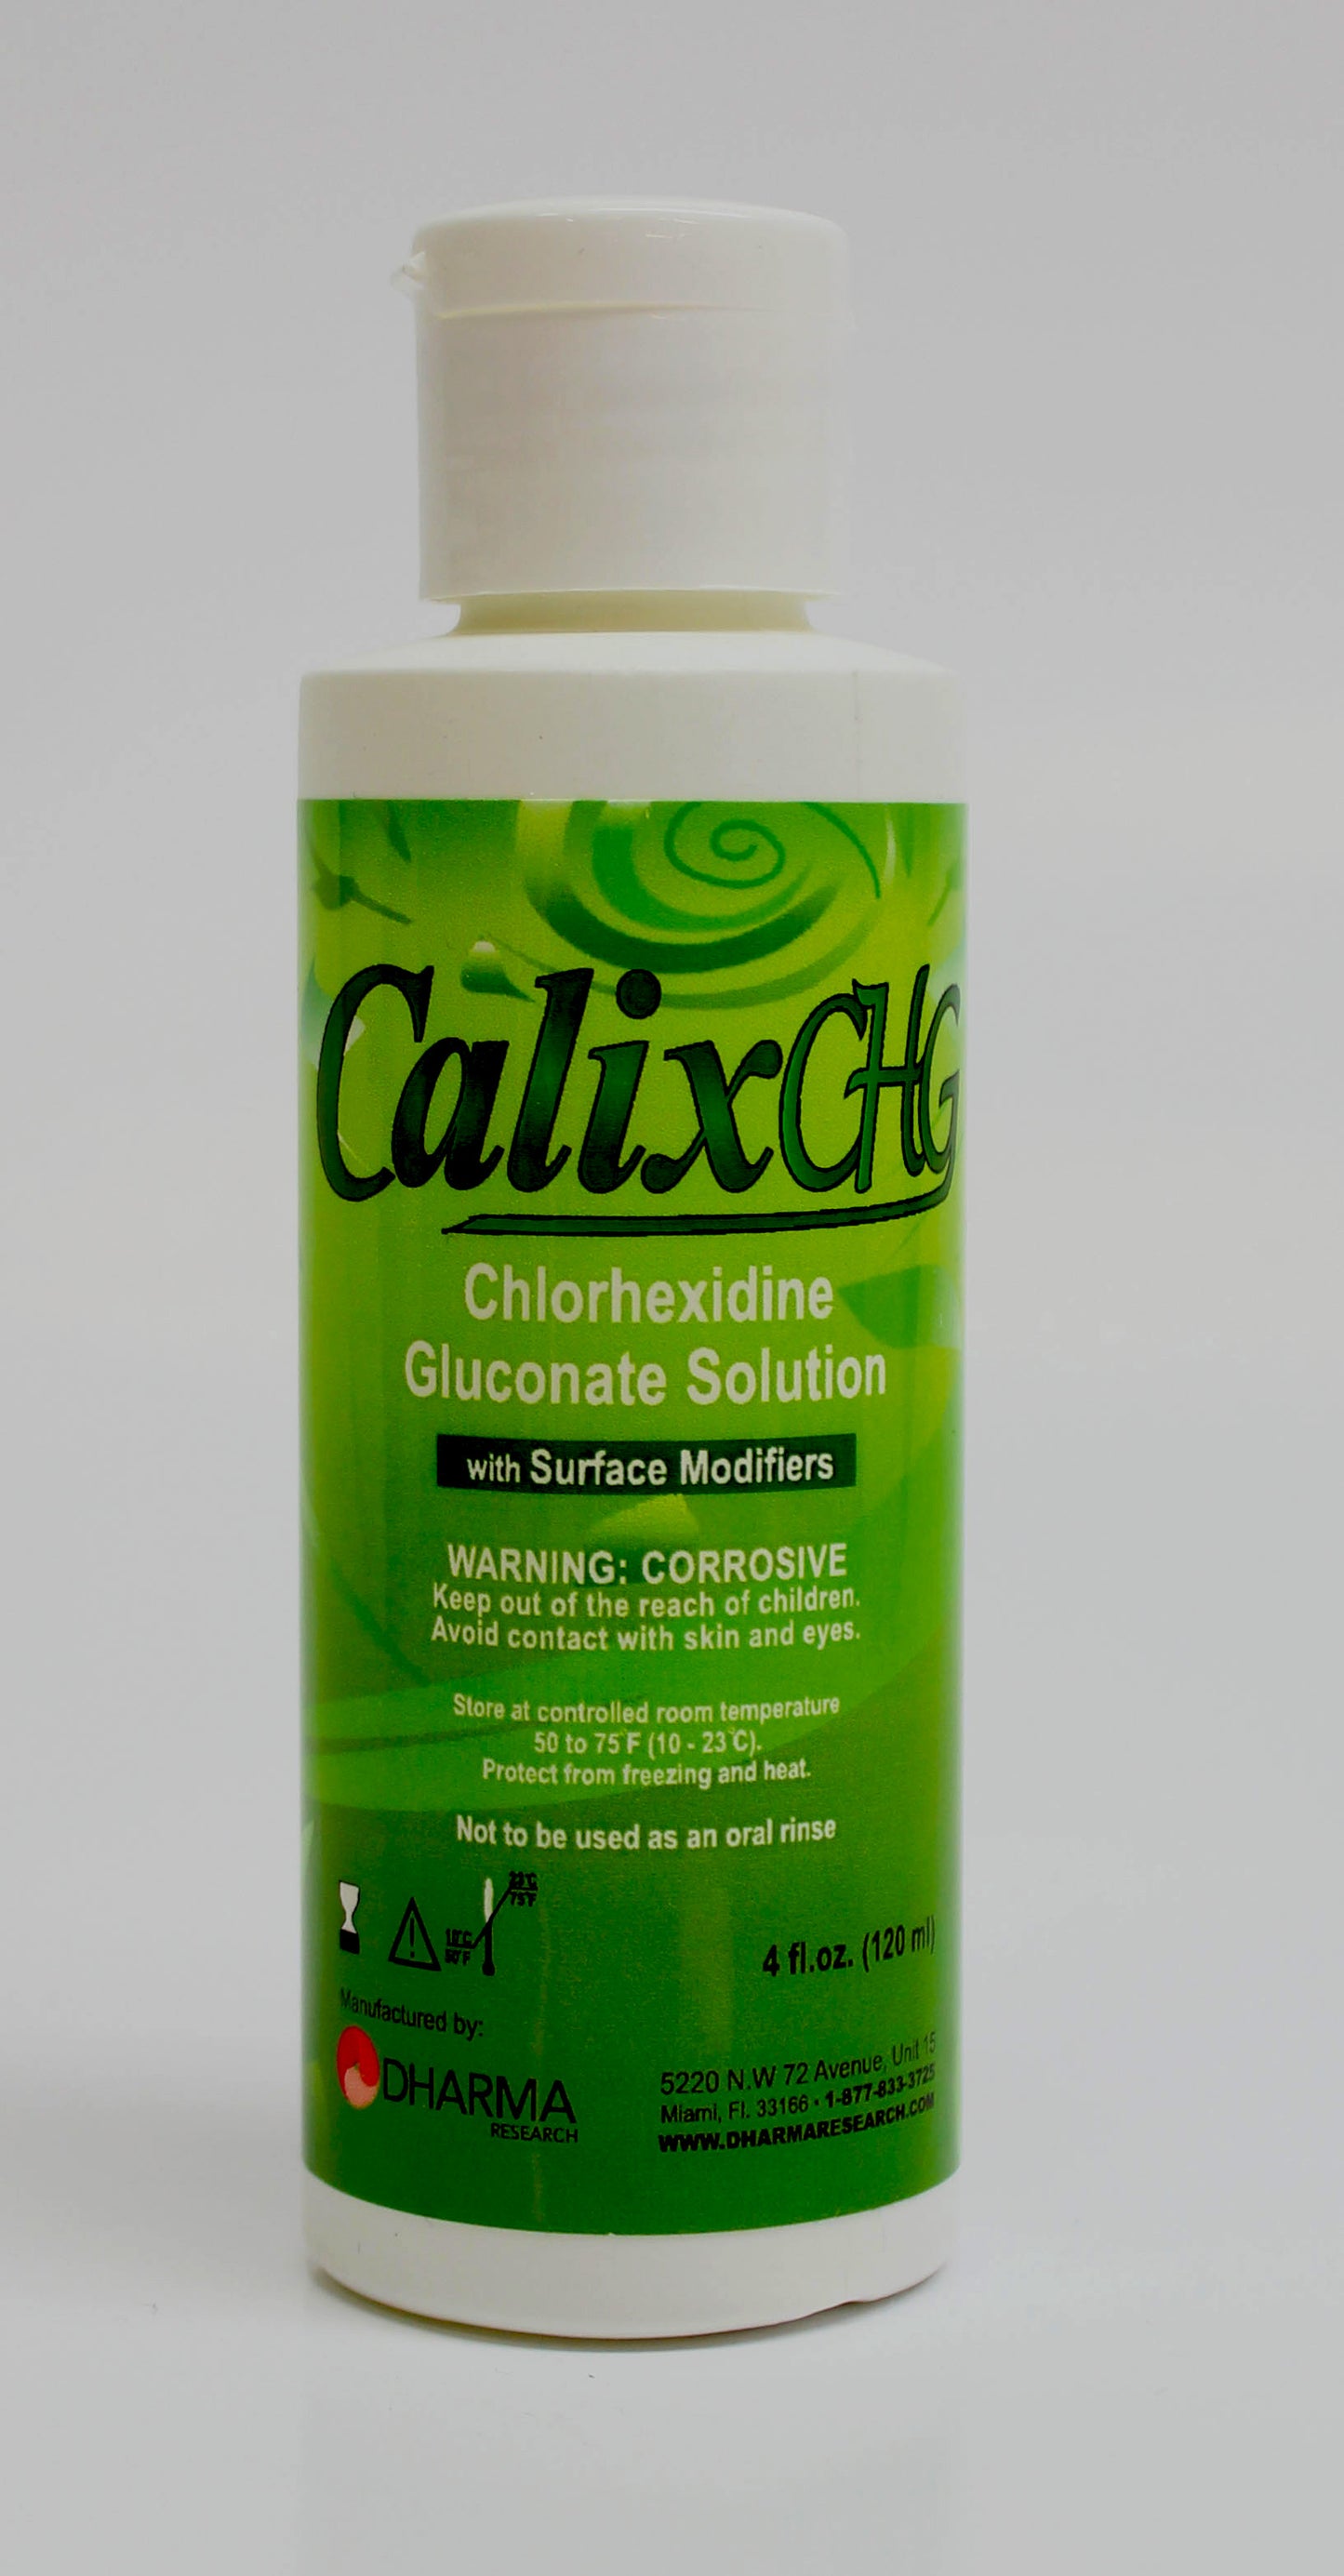 Calix CHG 2% Chlorhexidine Gluconate Solution